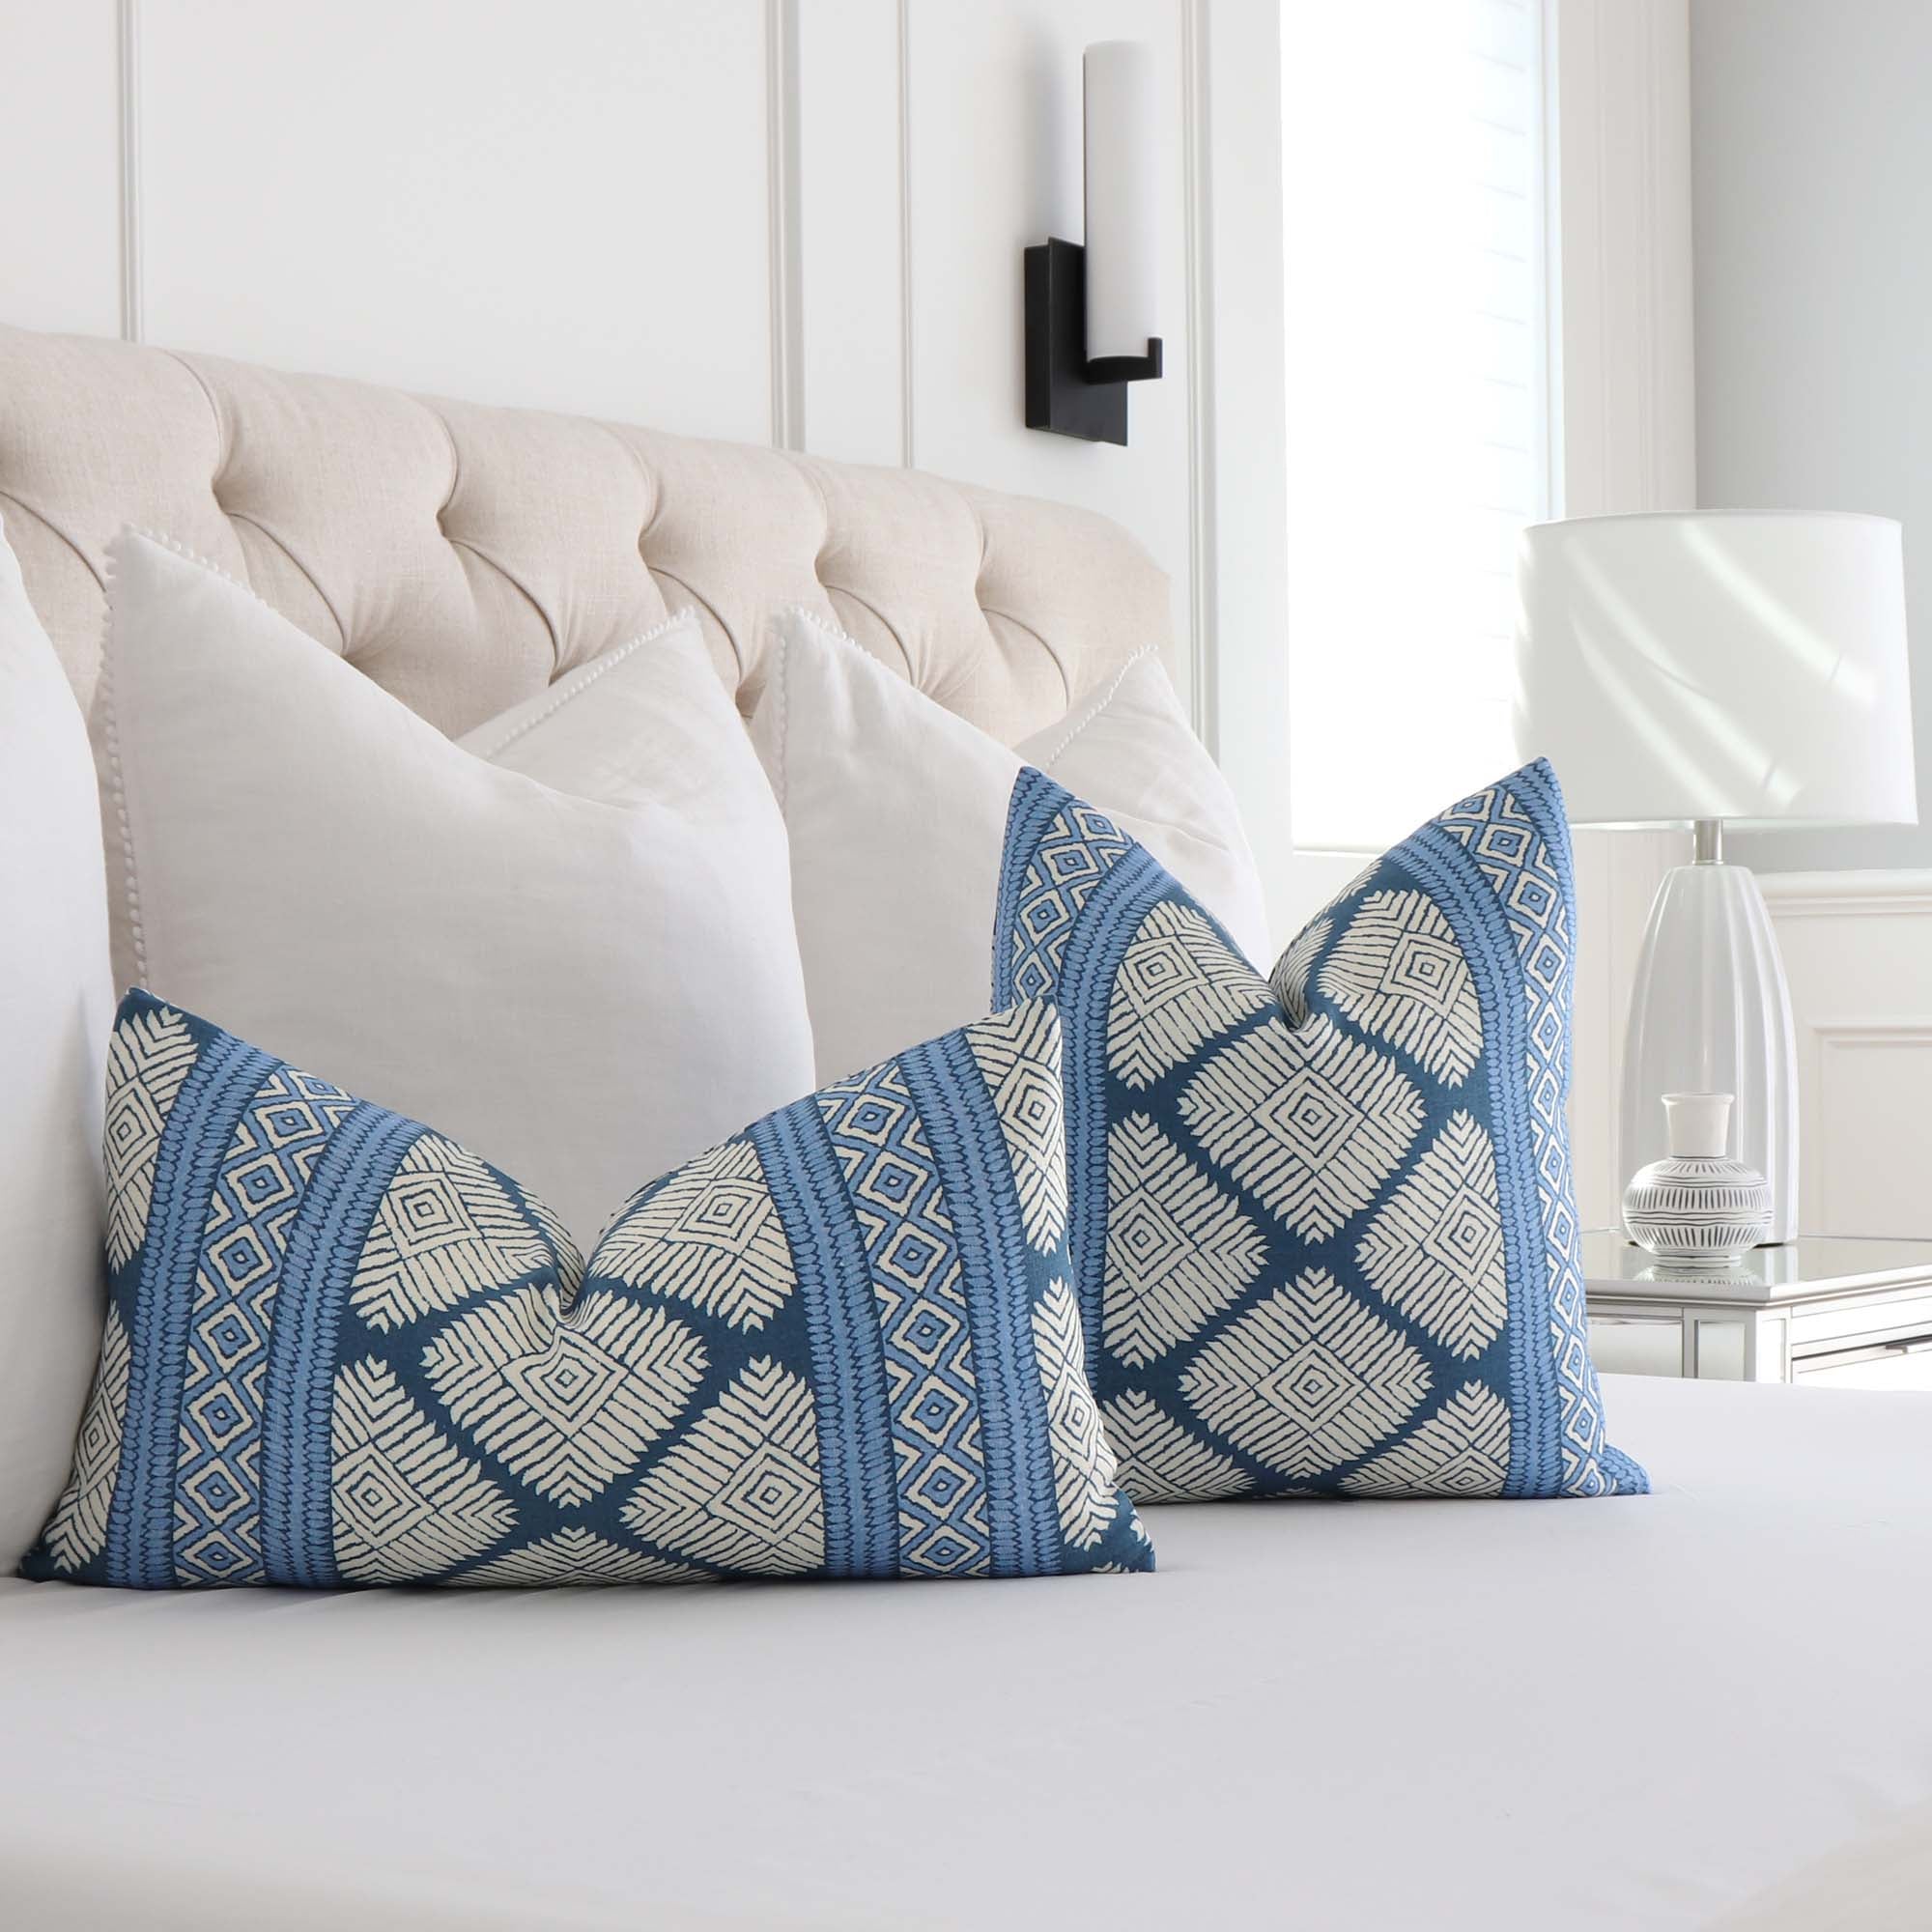 Thibaut Austin Navy Blue Block Print Geometric Designer Luxury Decorative Throw Pillow Cover in Bedroom